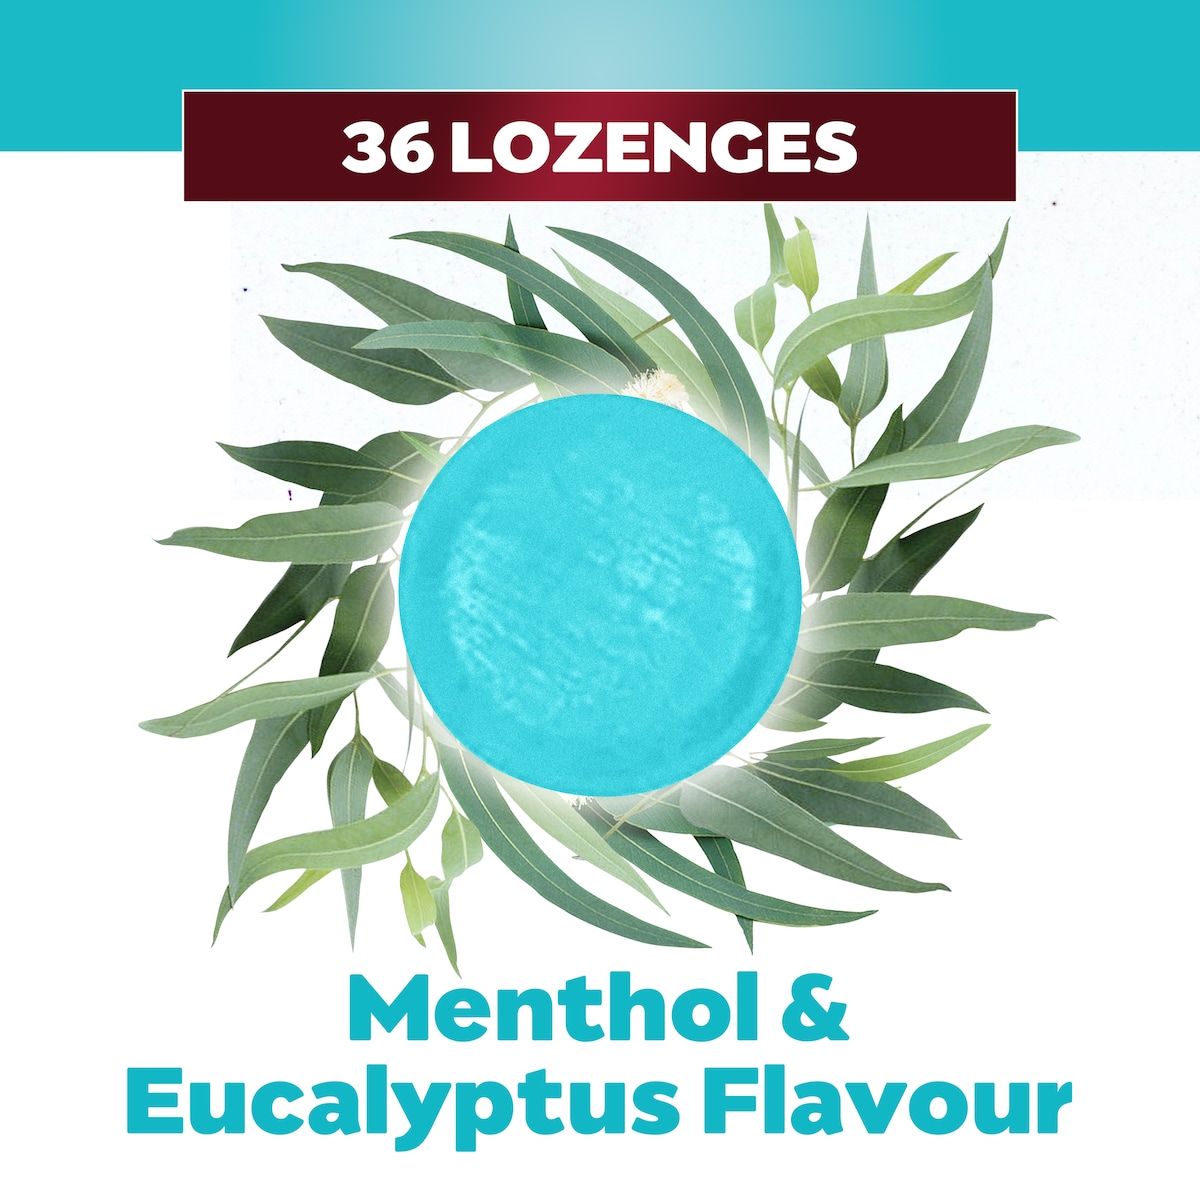 Betadine Sore Throat Lozenges Menthol & Eucalyptus 36 Pack